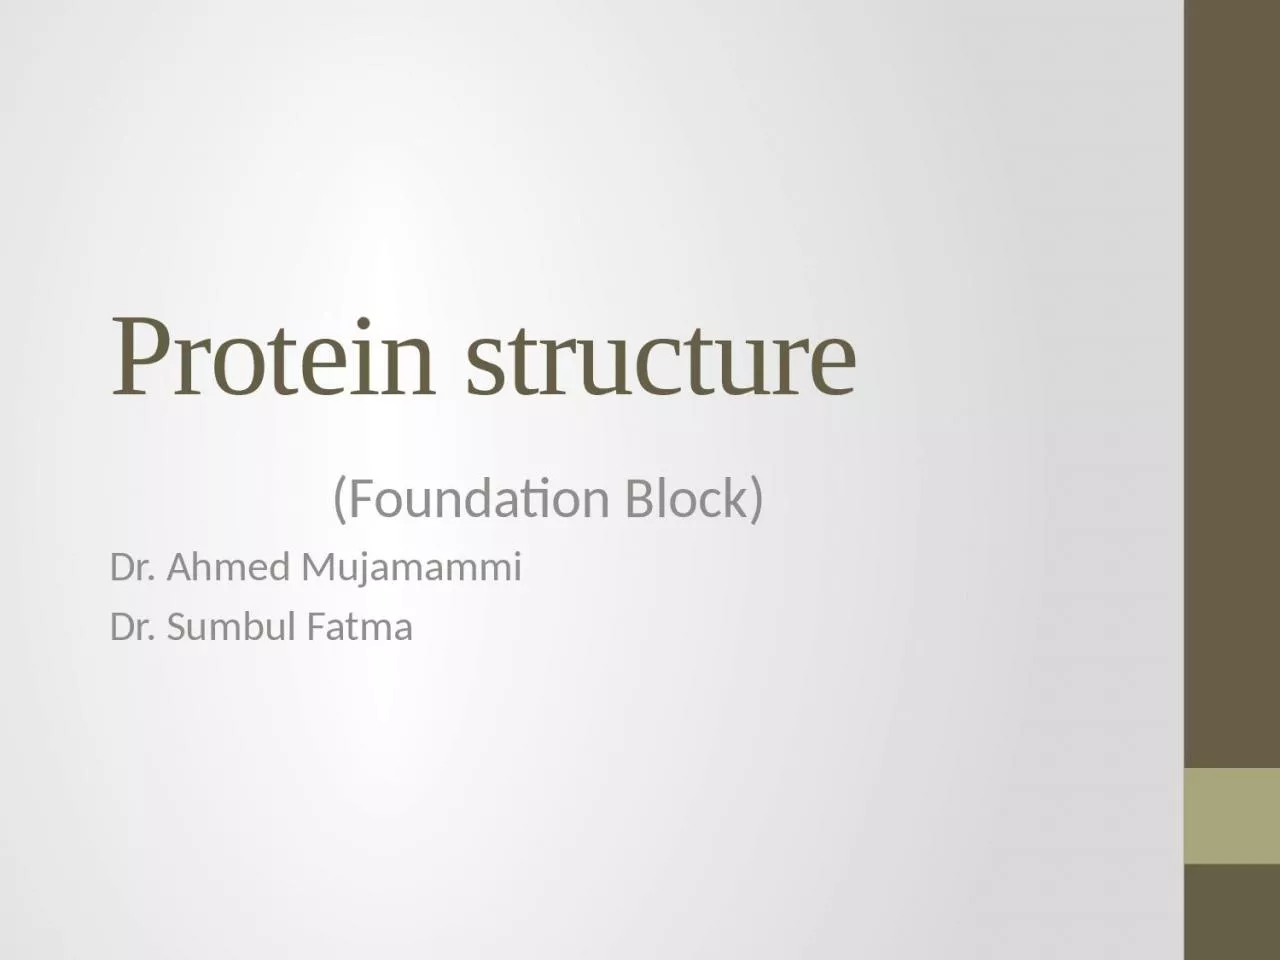 Protein structure (Foundation Block)